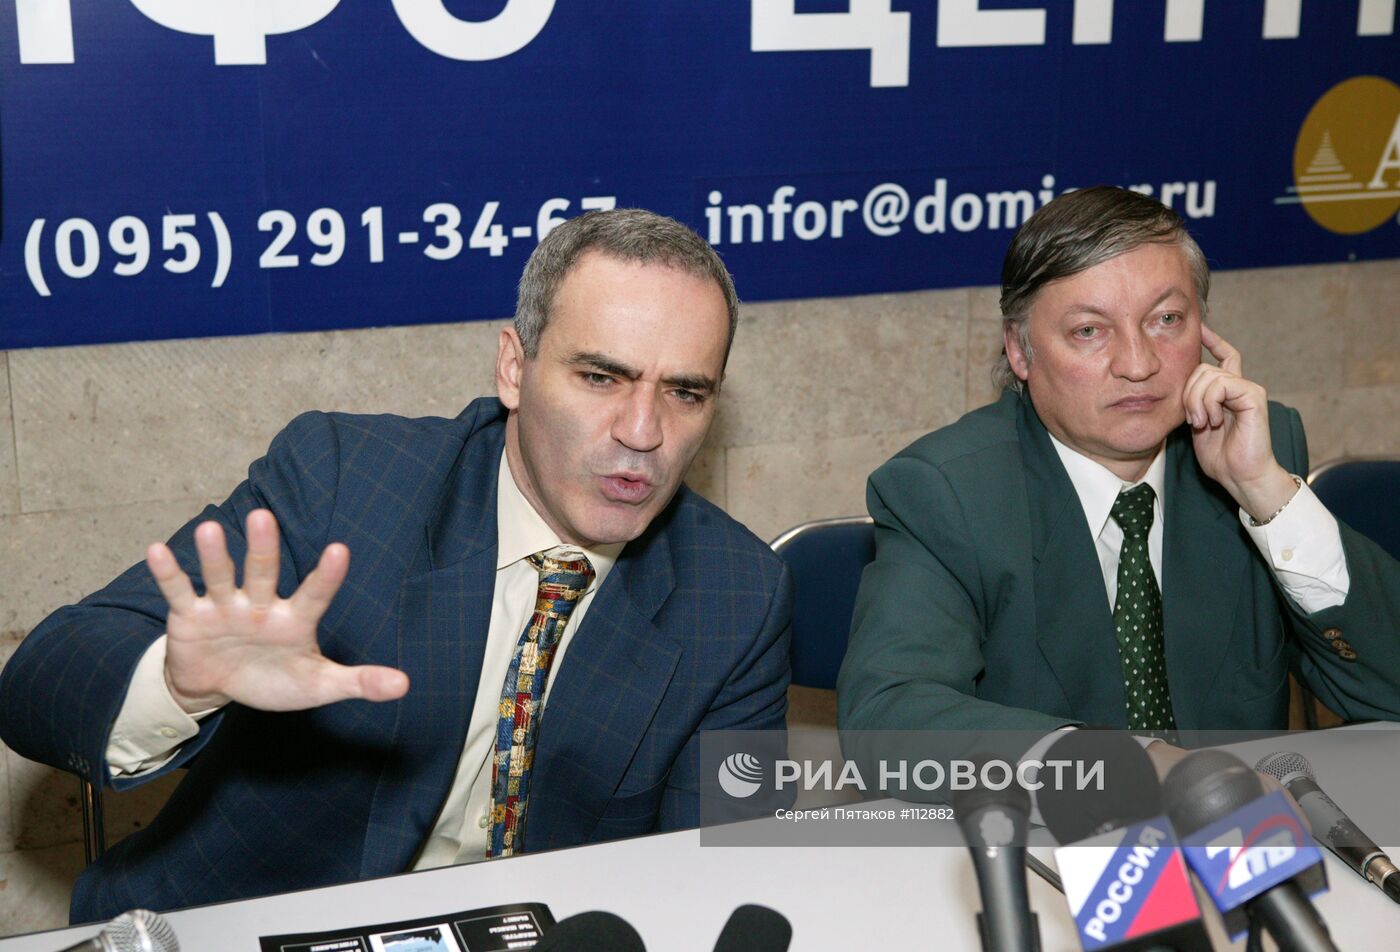 Шахматисты А. Карпов и Г. Каспаров